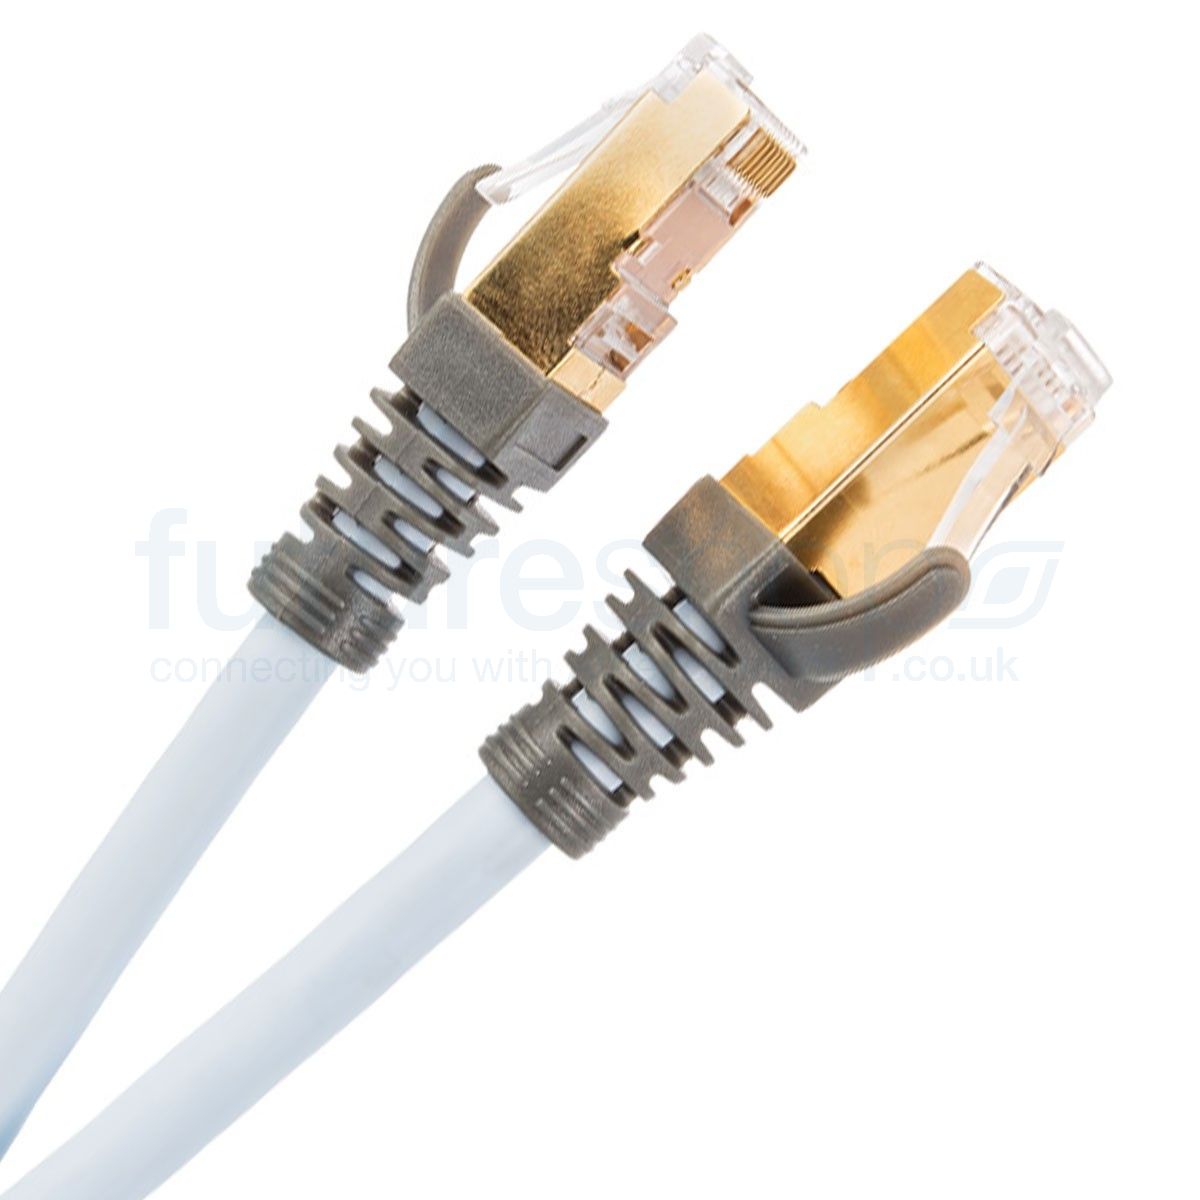 Supra CAT8 Flame Retardant Ethernet Cable